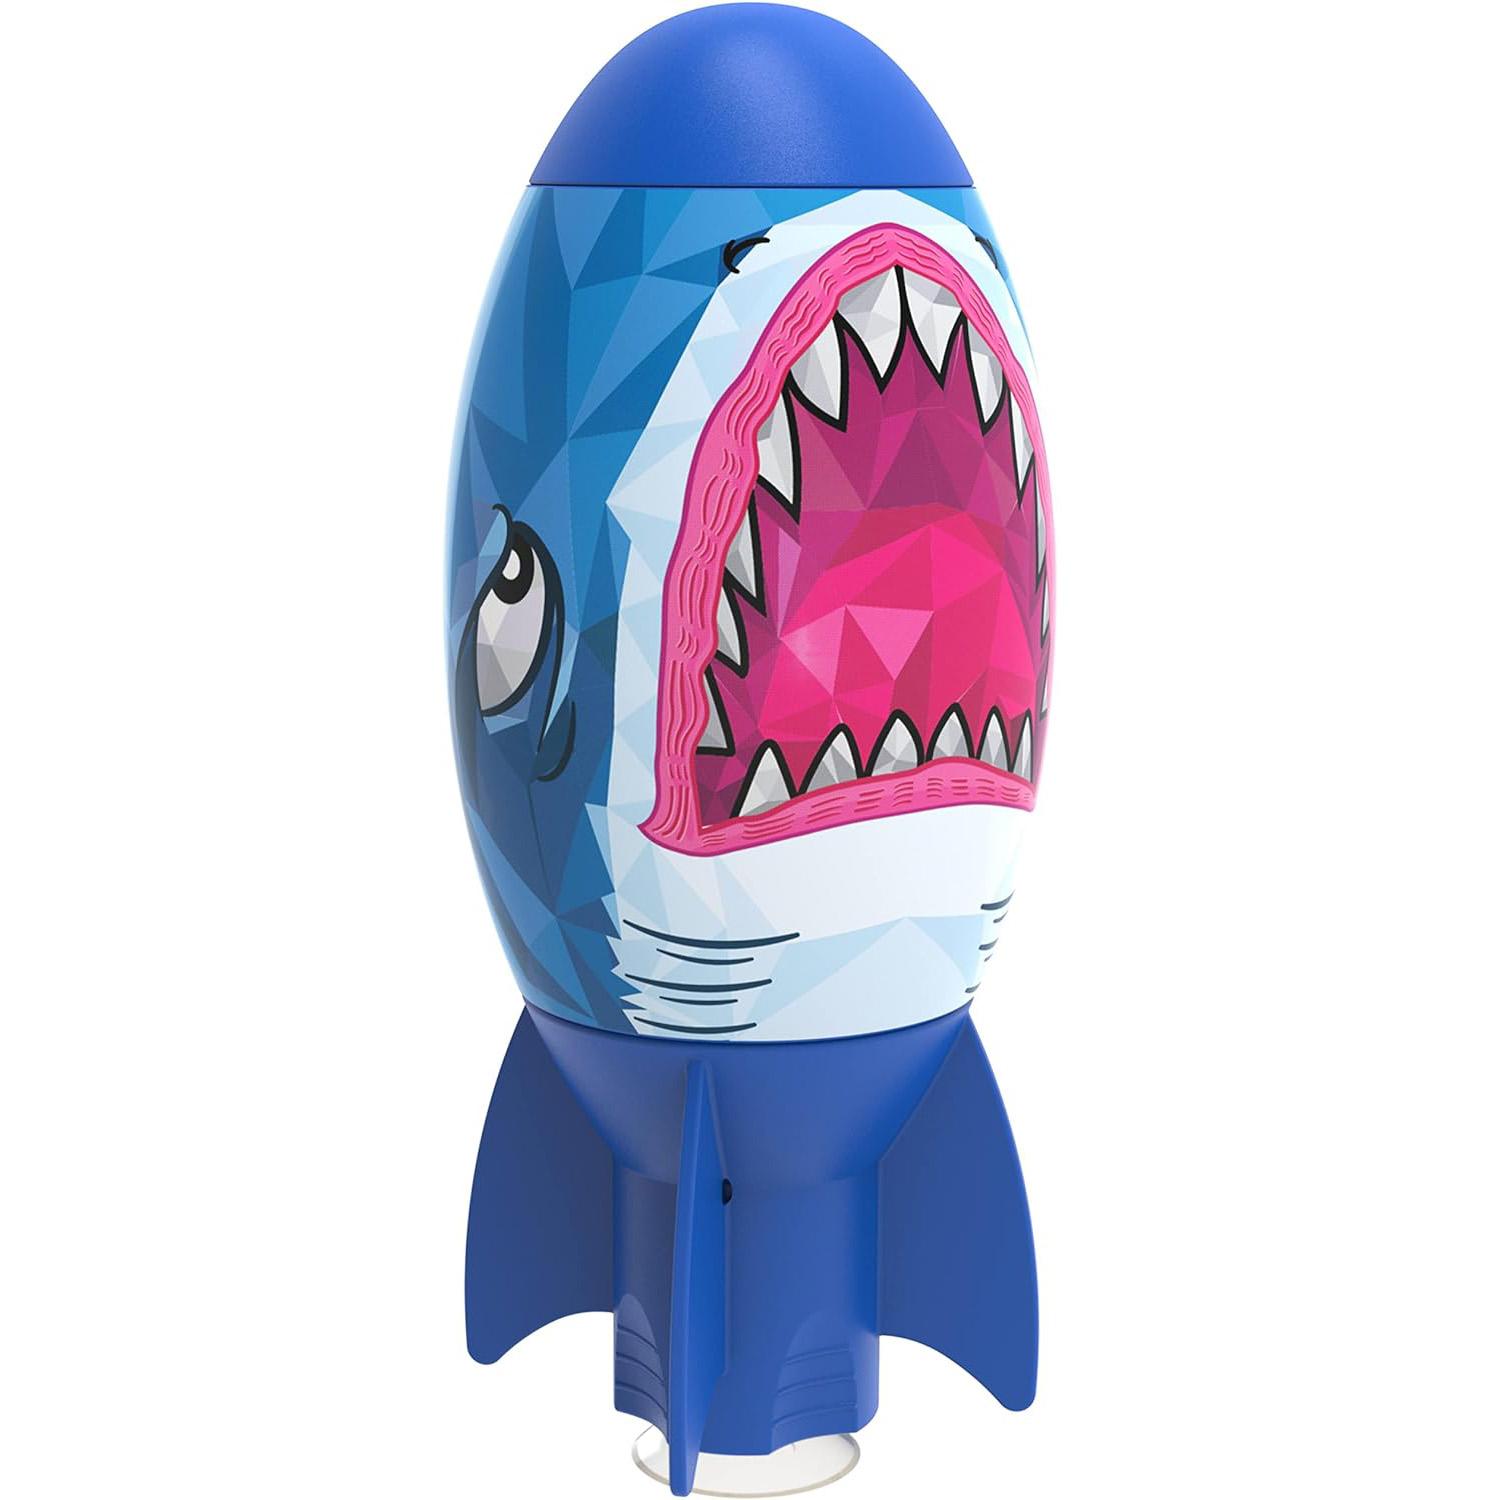 SwimWays Boys or Girls Shark Rocket Torpedo Dive Pool Toy for $5.96